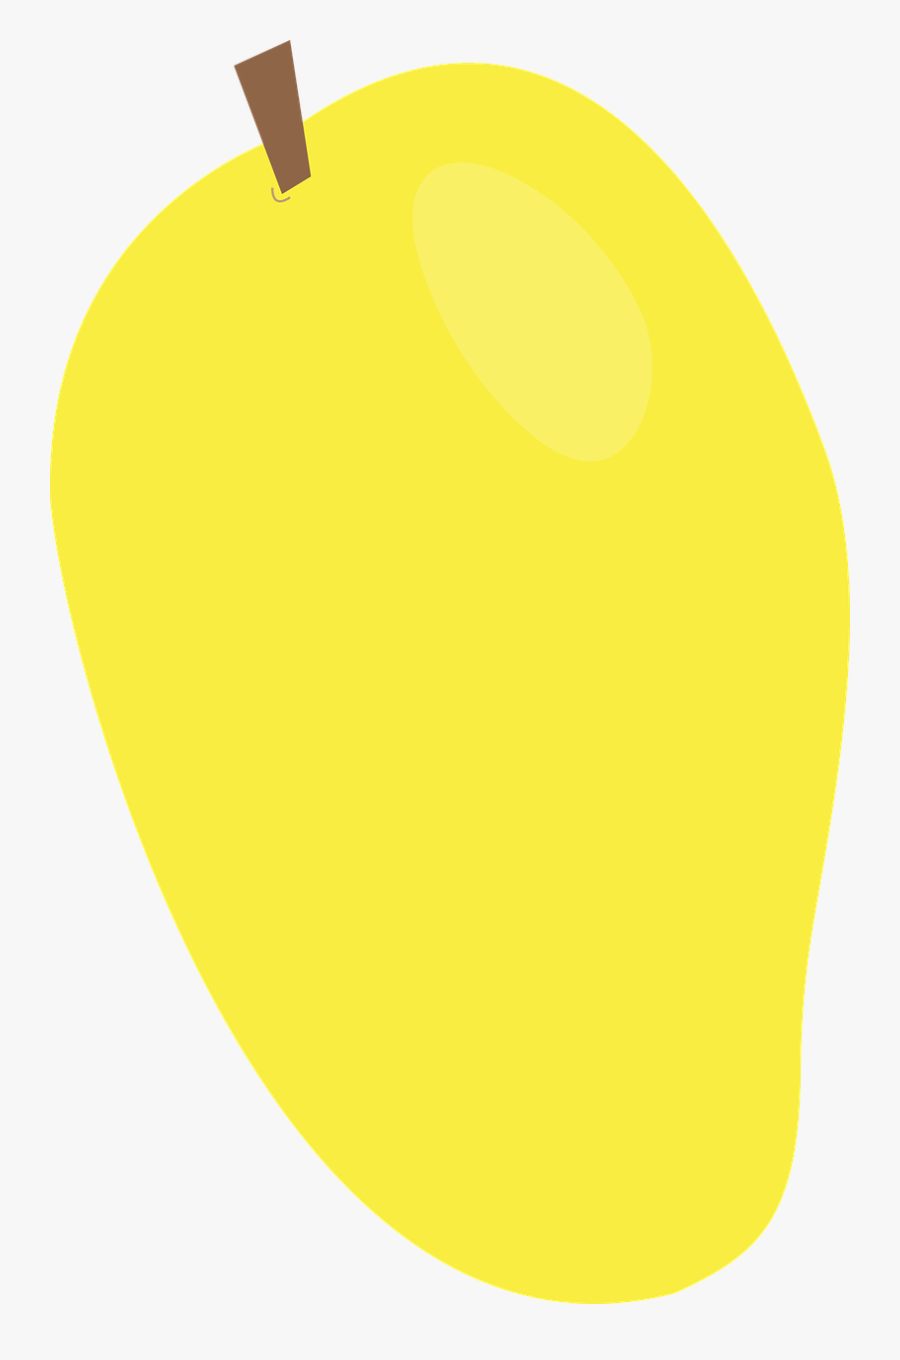 Mango Ripe Yellow Free Photo - Bfb Yellow Face Body, Transparent Clipart